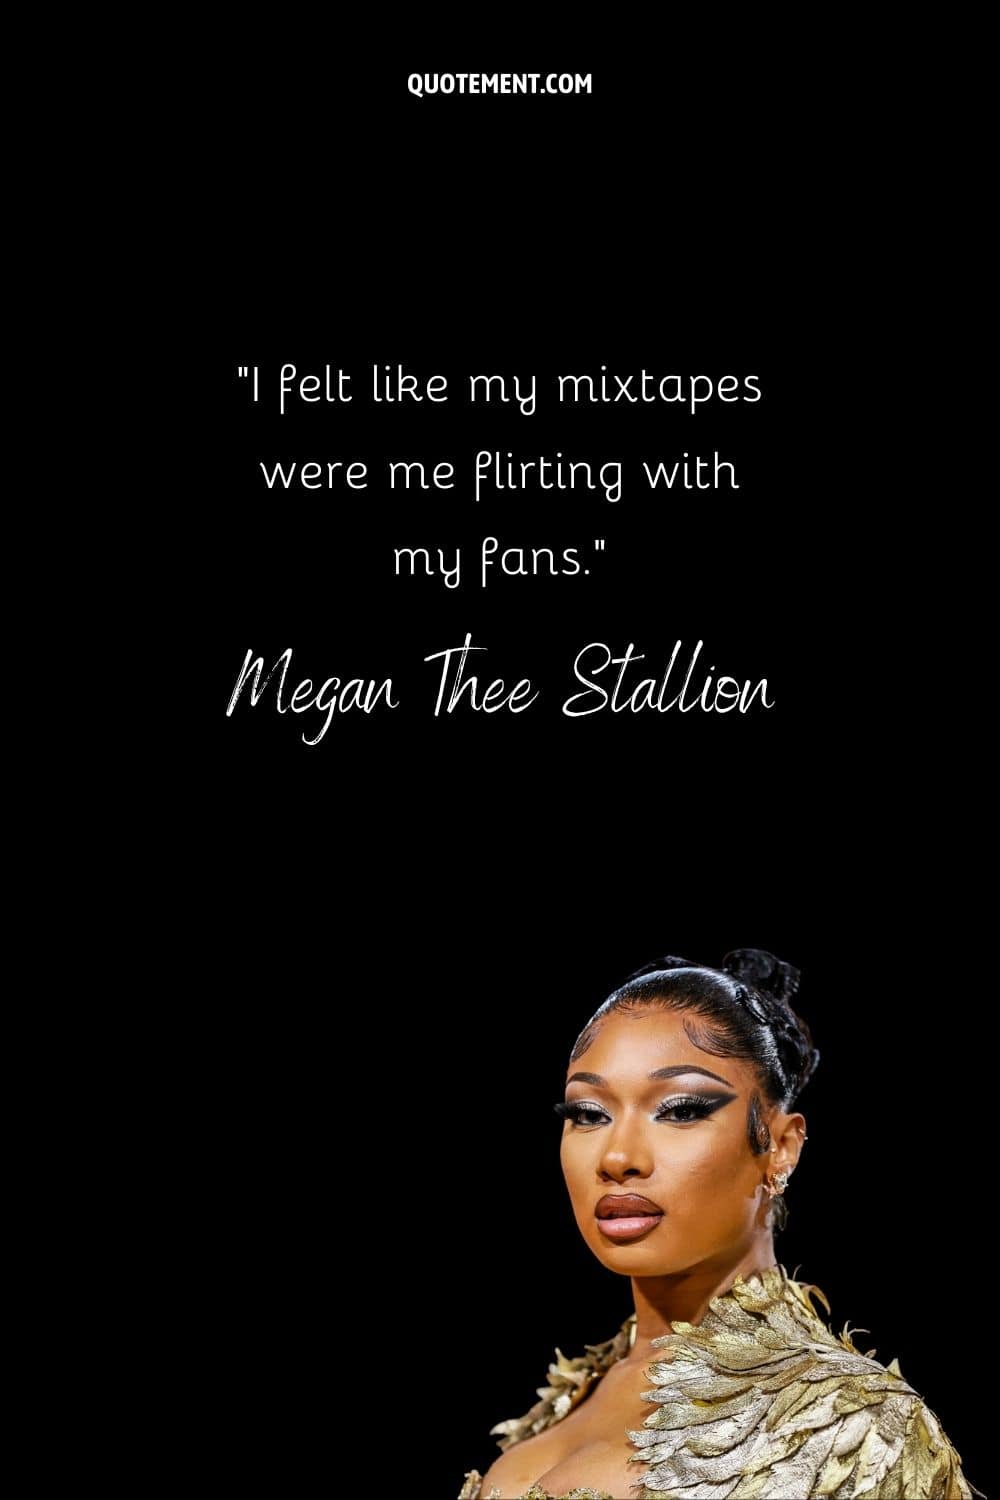 “I felt like my mixtapes were me flirting with my fans.” — Megan Thee Stallion